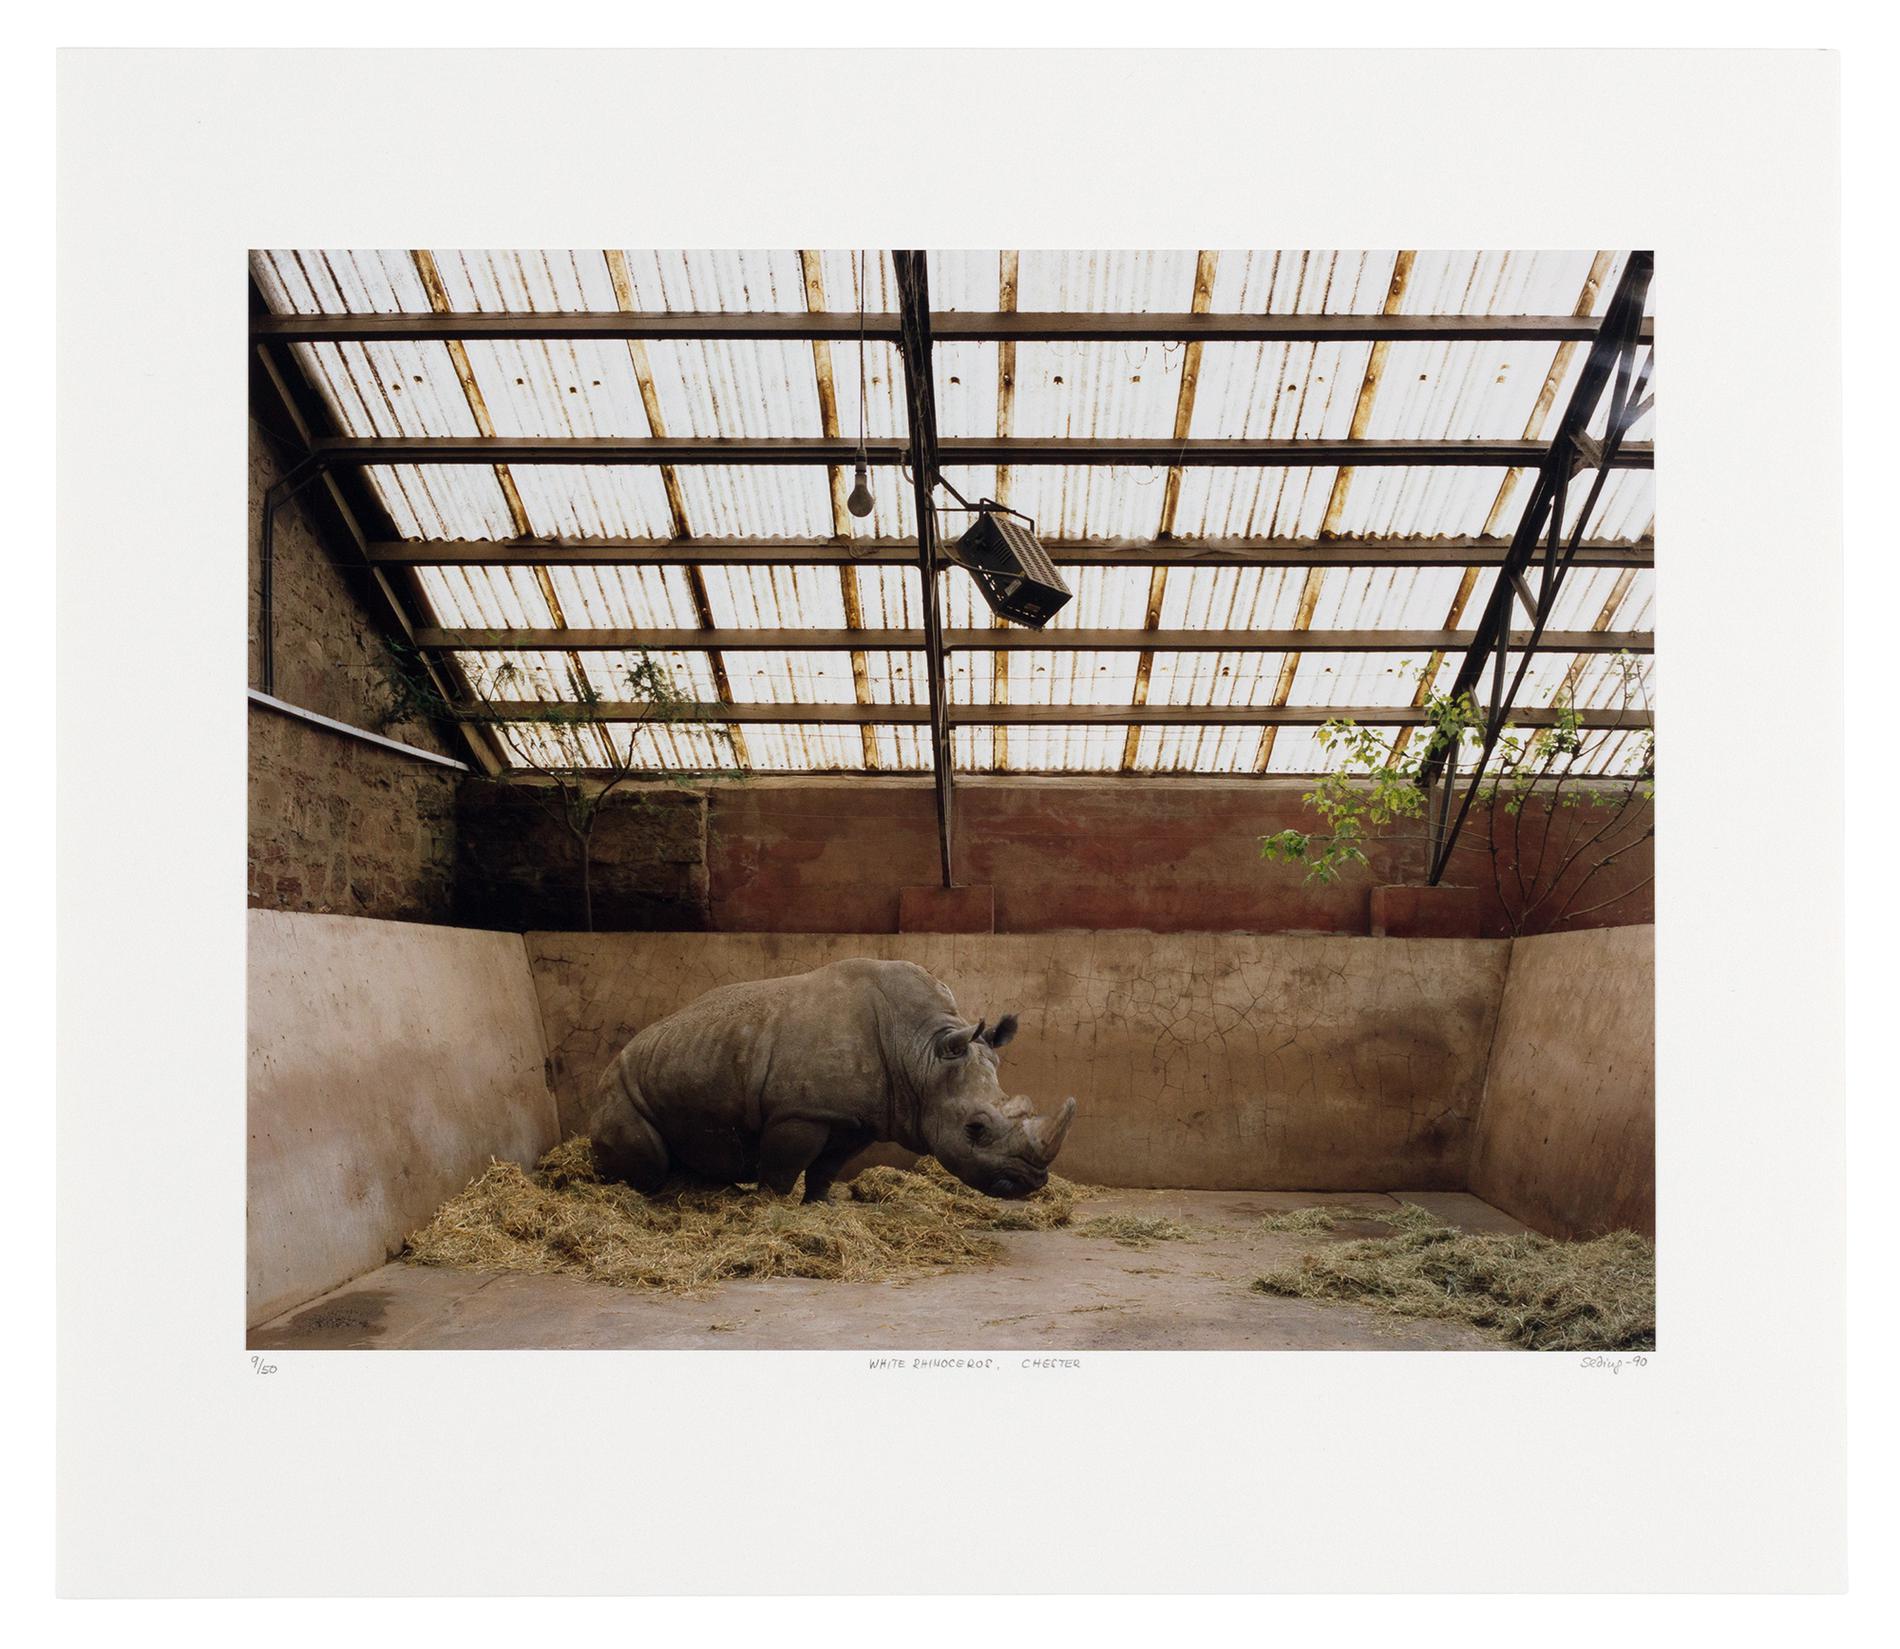 A rhino in a zoo enclosure.